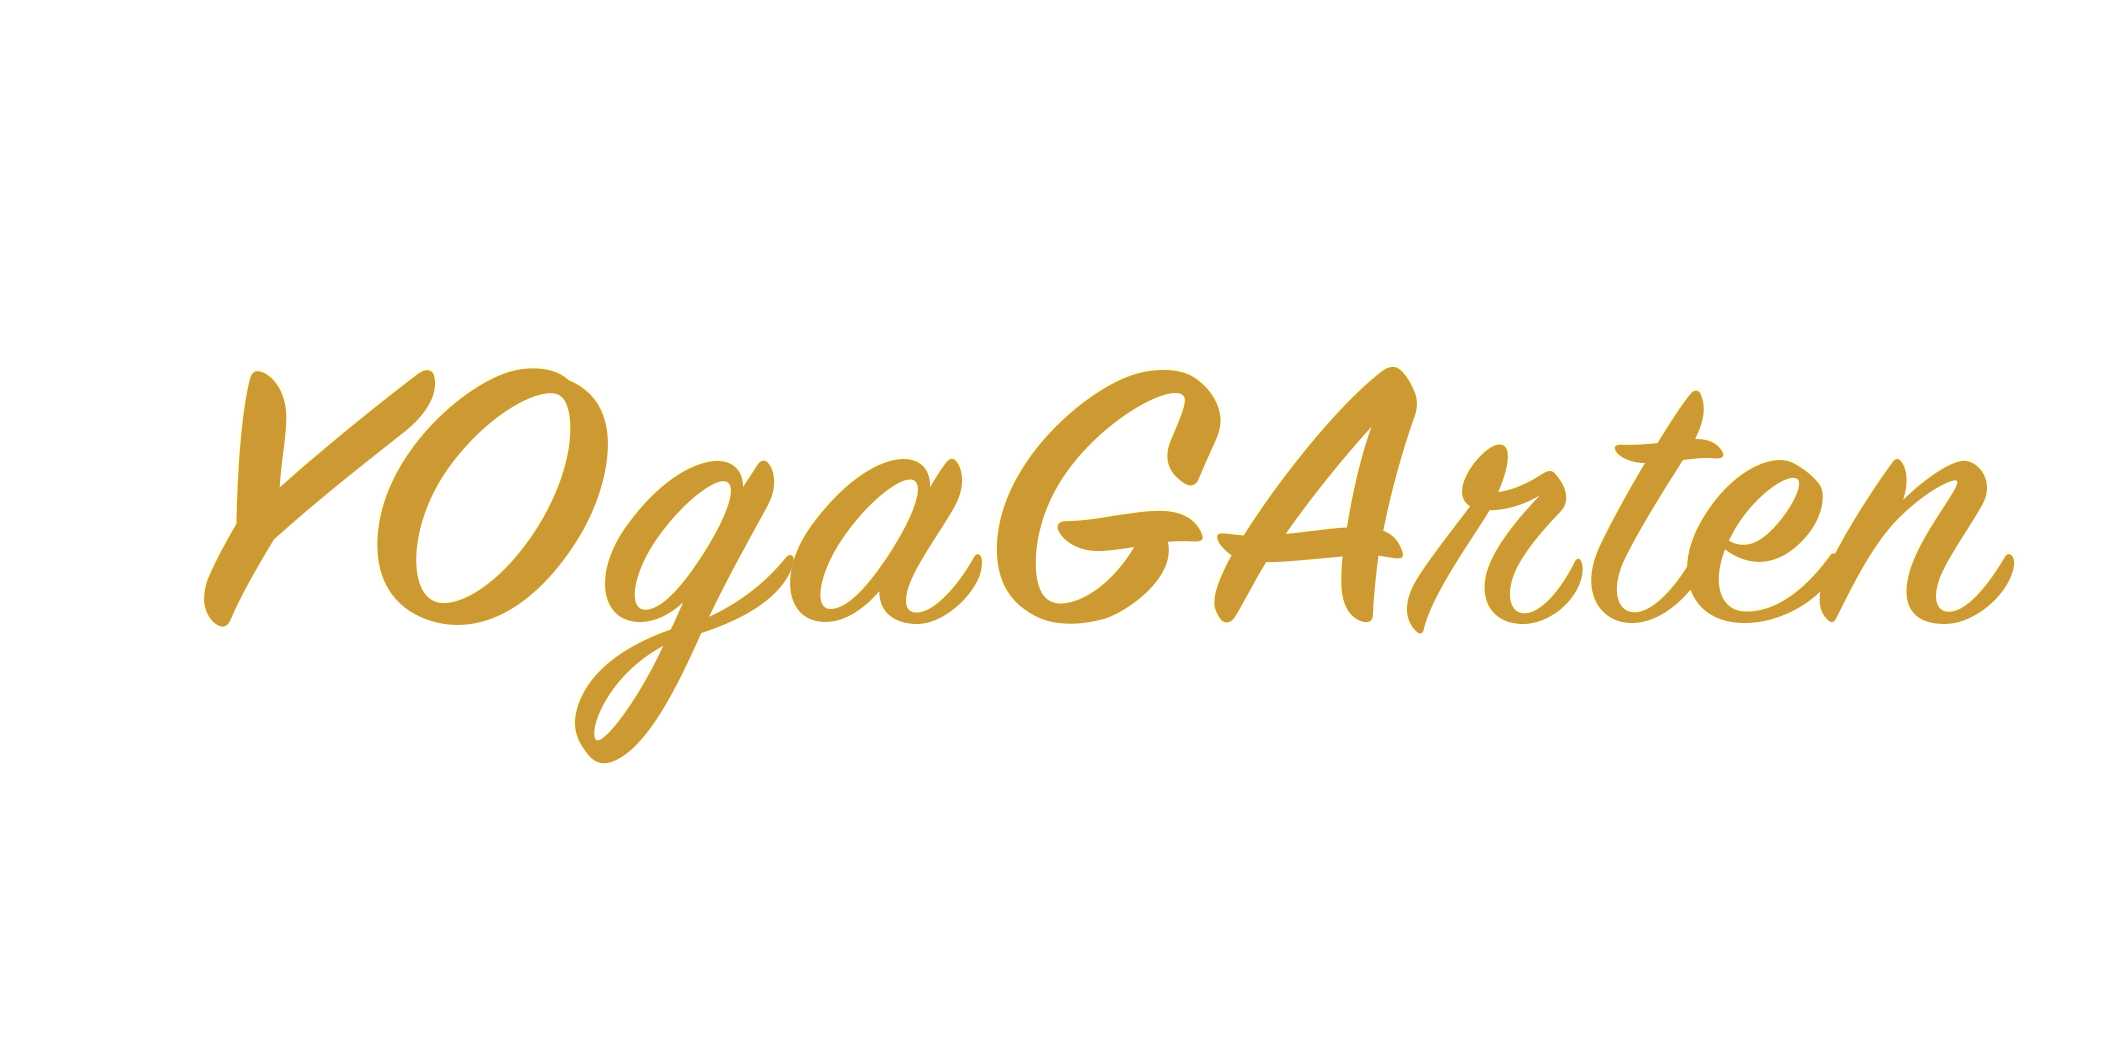 YOgaGArten